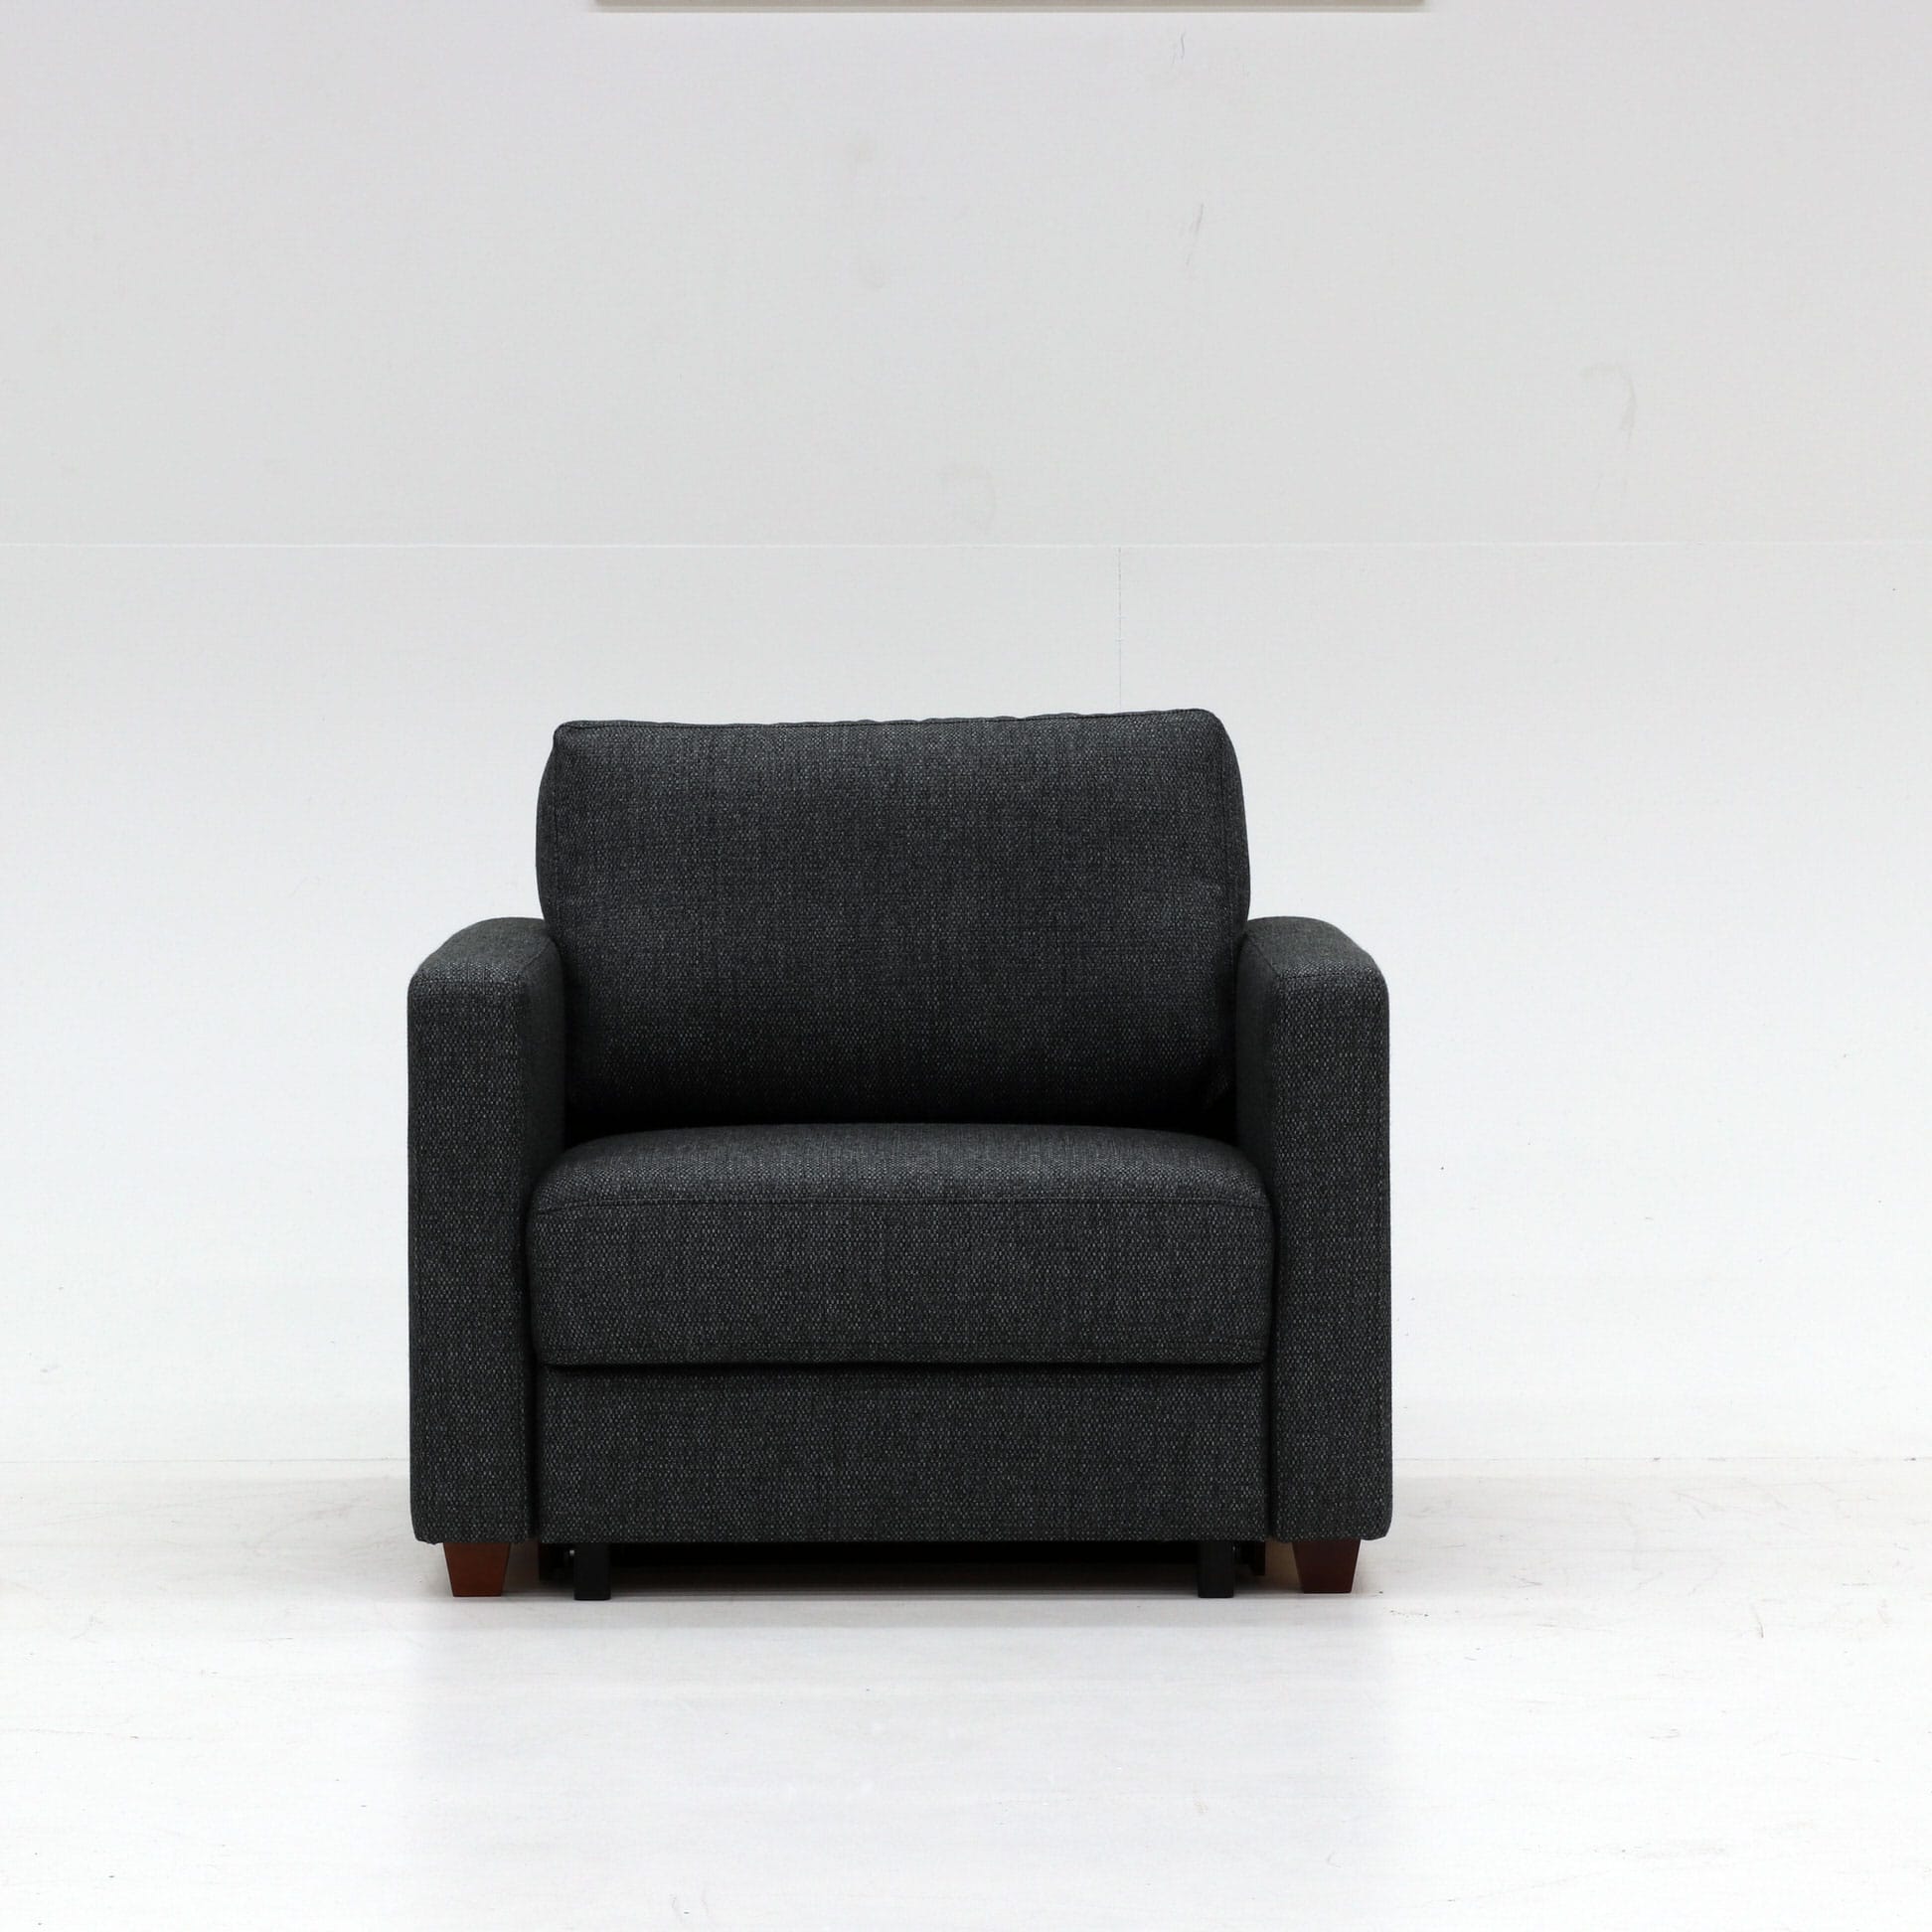 Luonto Couches & Sofa Fun 481 Fantasy Sleeper Chair (Cot Size) | Luonto